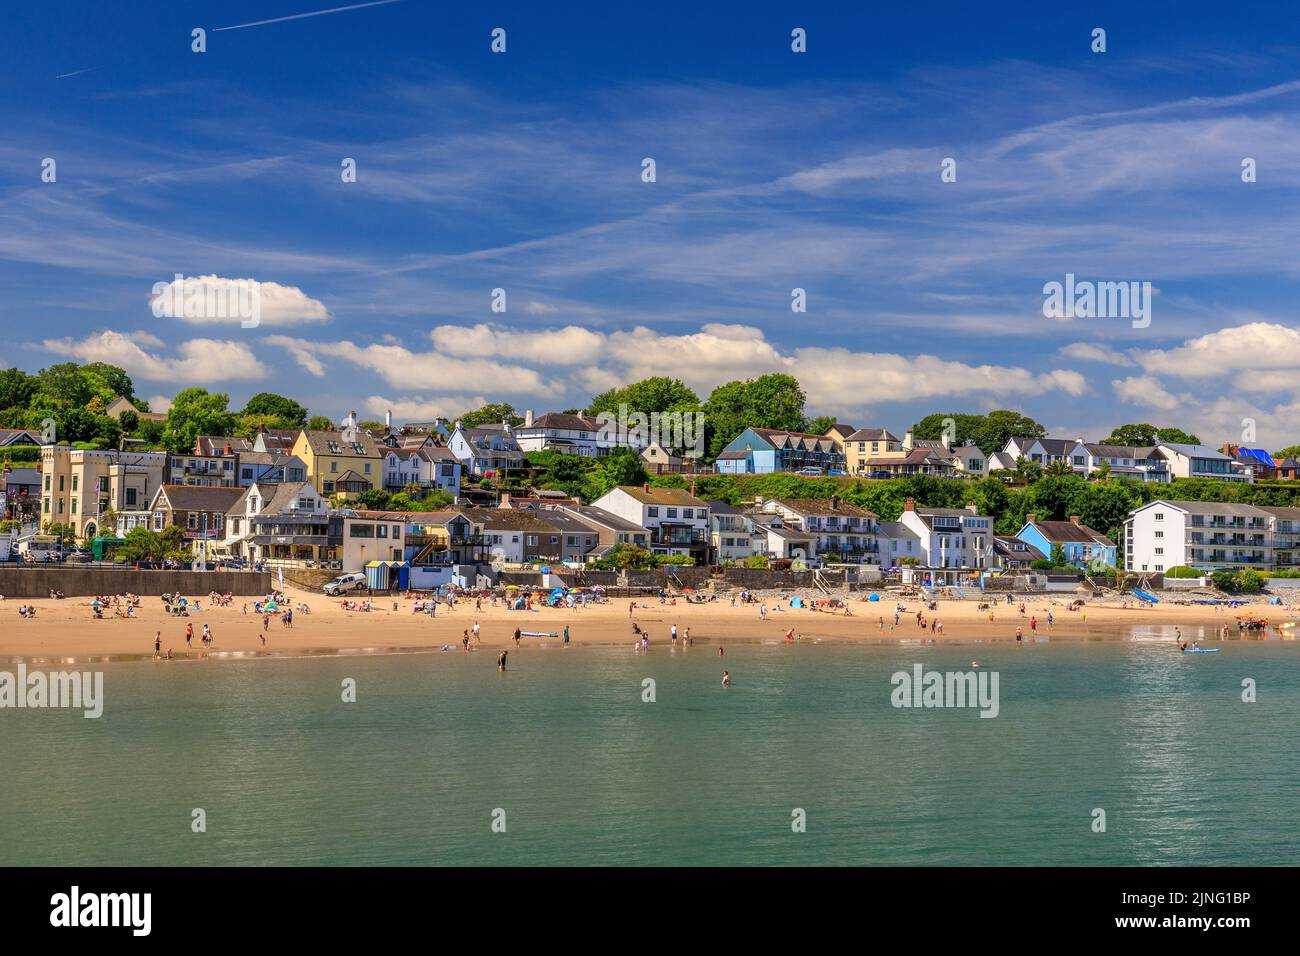 The sandy beach at Saundersfoot, Pembrokeshire, Wales, UK Stock Photo